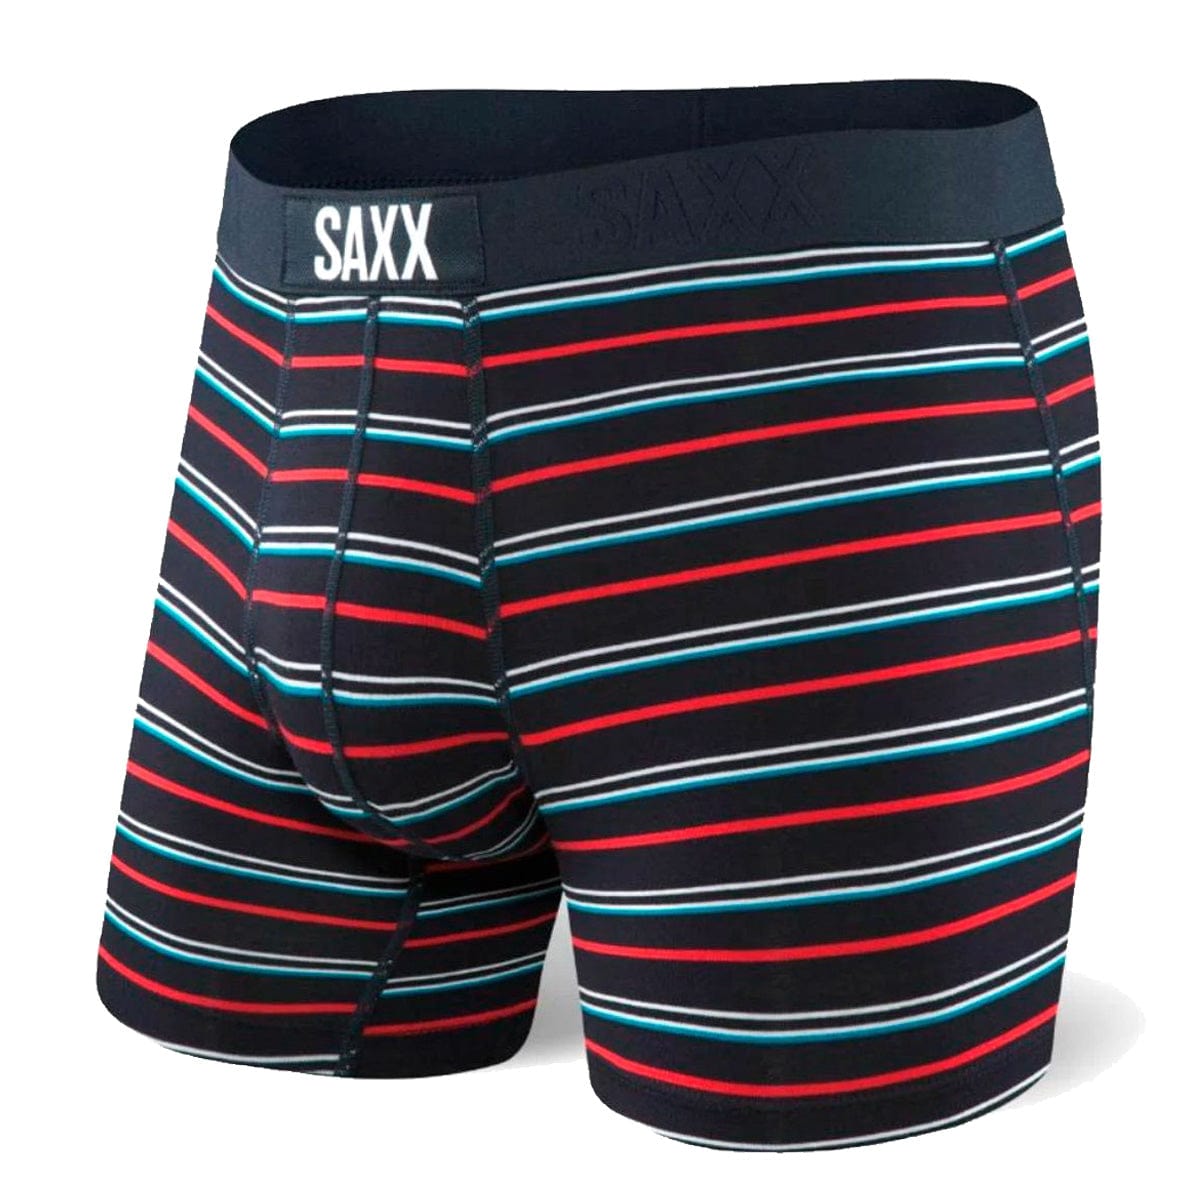 Saxx Vibe Boxers - Dark Ink Coast Stripe - The Hockey Shop Source For Sports